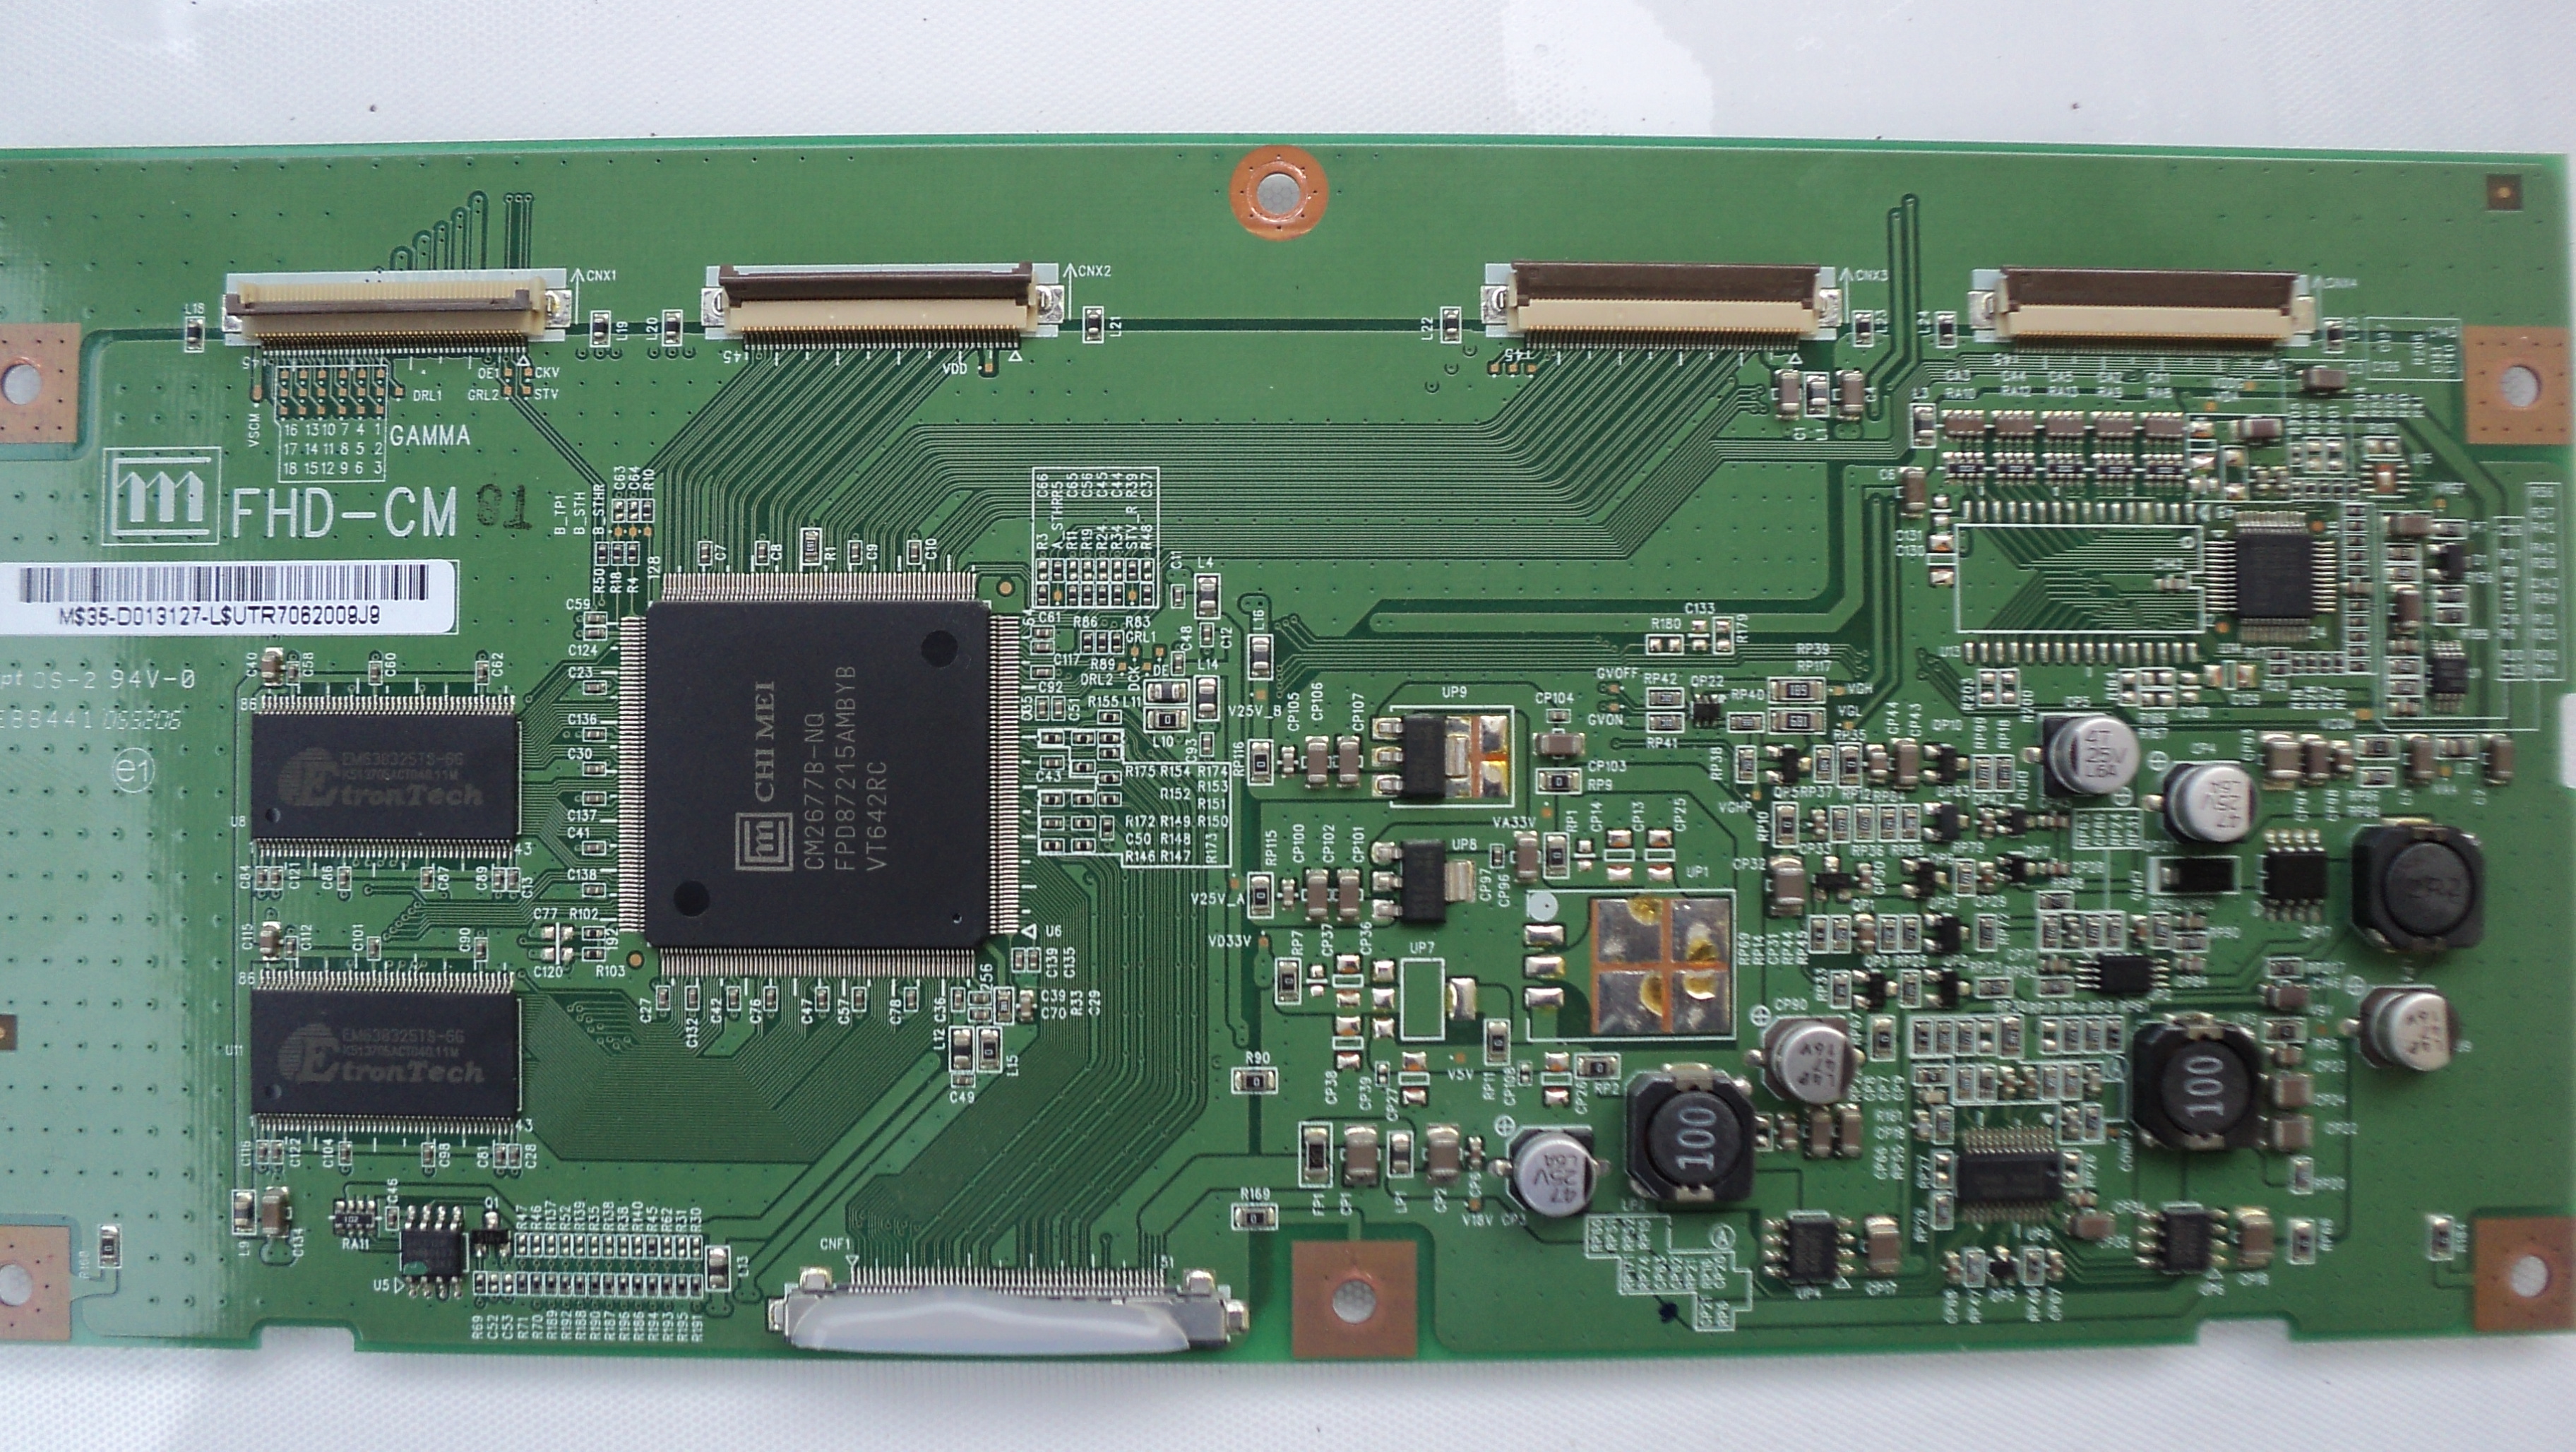  PALLADIUM LCD42MB2642736 (T-con FHD-CM)